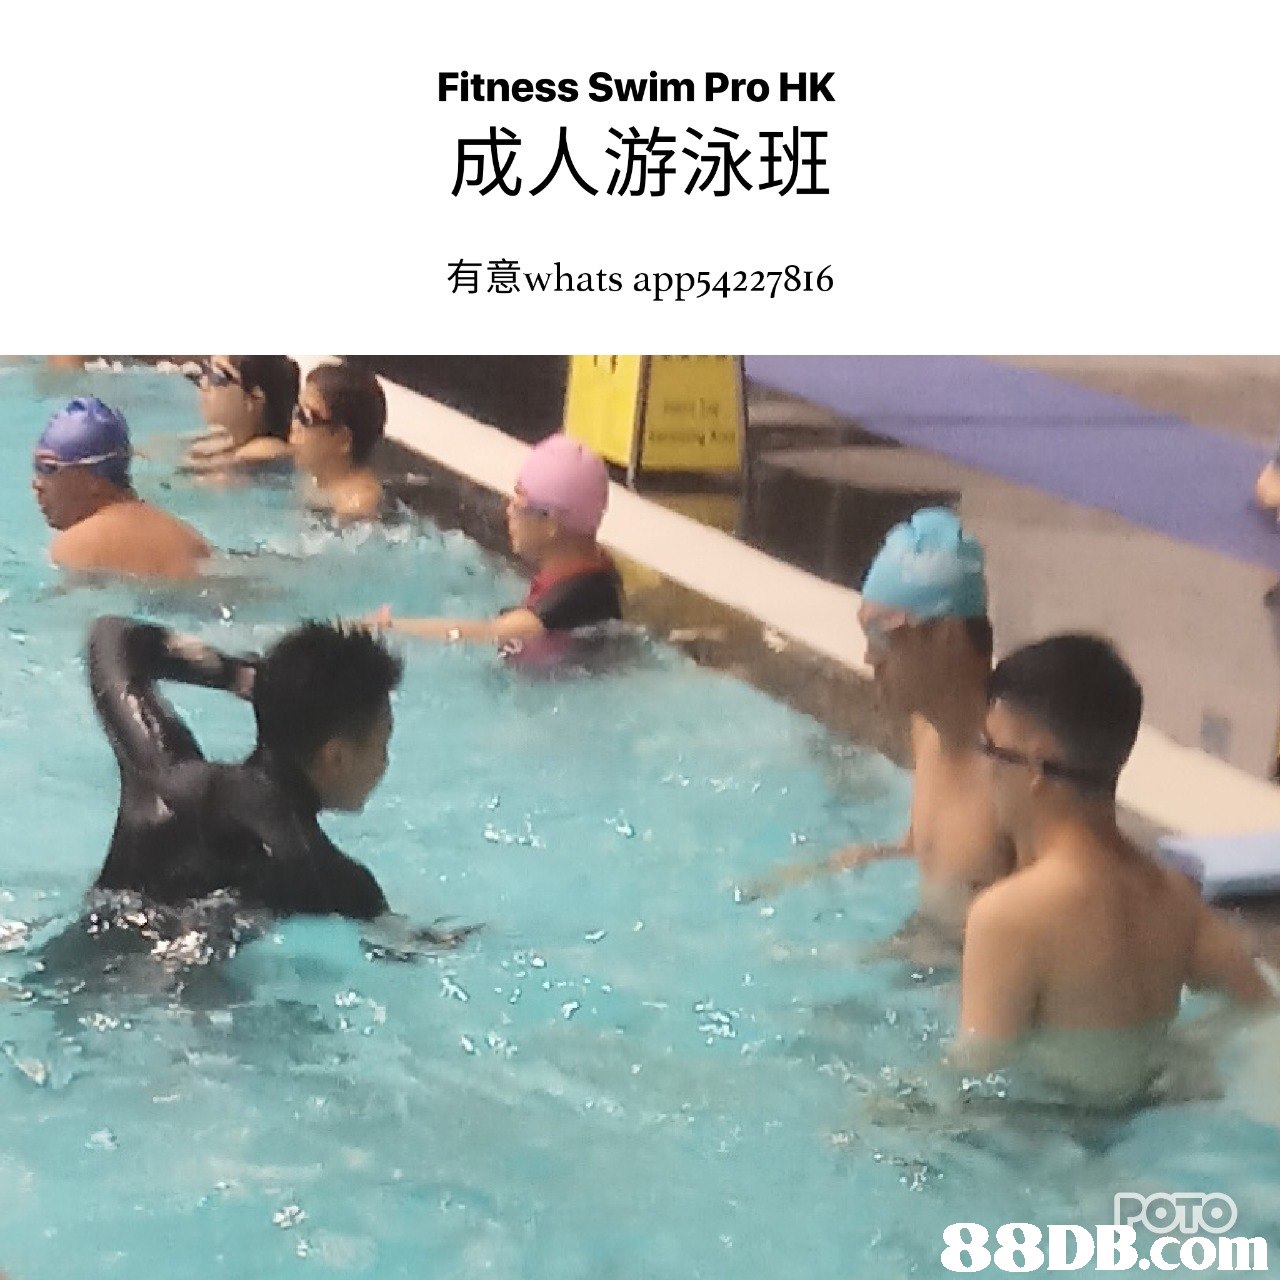 Fitness Swim Pro HK 成人游泳班 有意whats a pp542 27816 POTO   leisure,swimming pool,fun,swimming,water